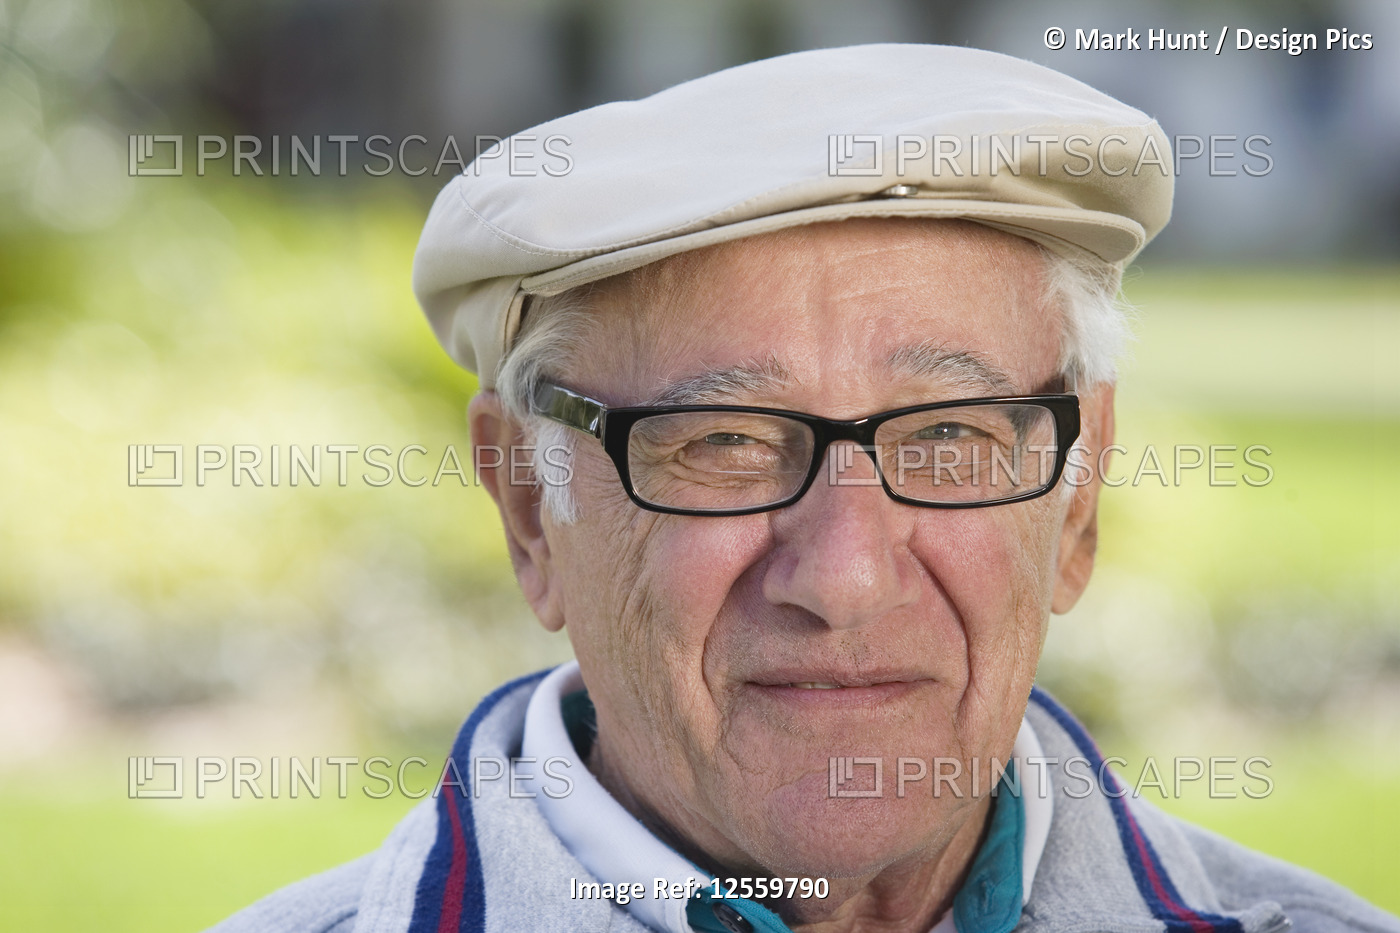 Portrait of a senior man smiling.